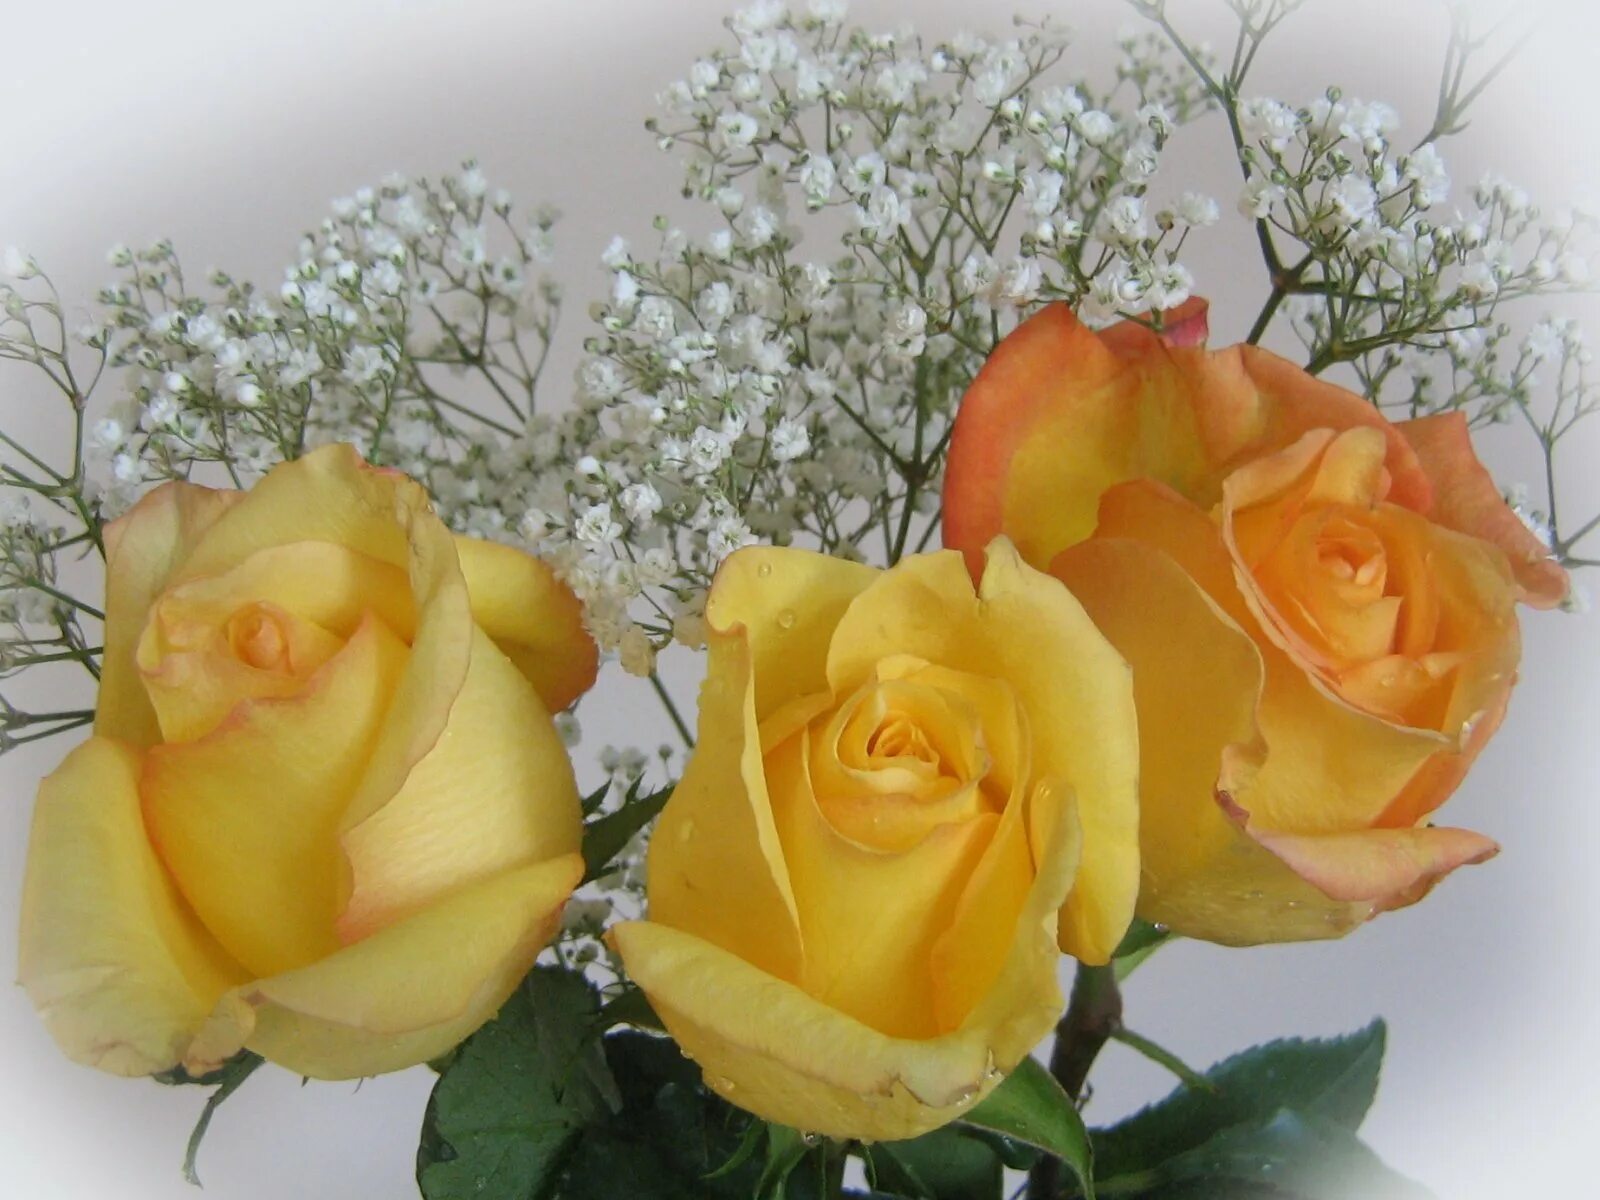 Открытка с желтыми розами. Желтые розы. Букет желтых роз. Красивые желтые розы. Шикарный букет желтых роз.